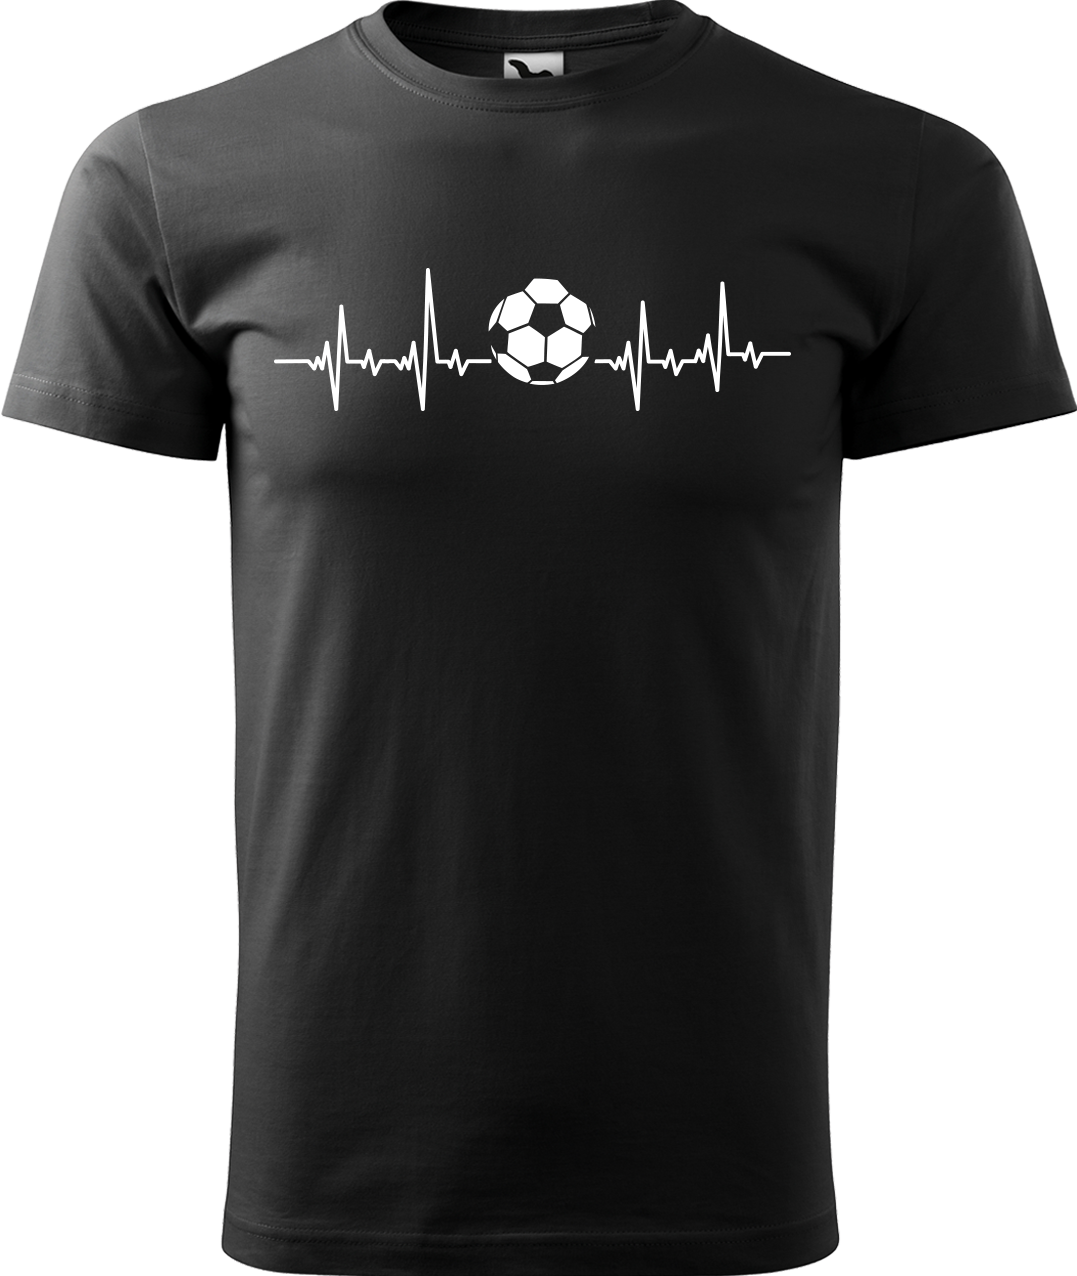 Tričko pro fotbalistu - Fotbalistův kardiogram Velikost: M, Barva: Černá (01)